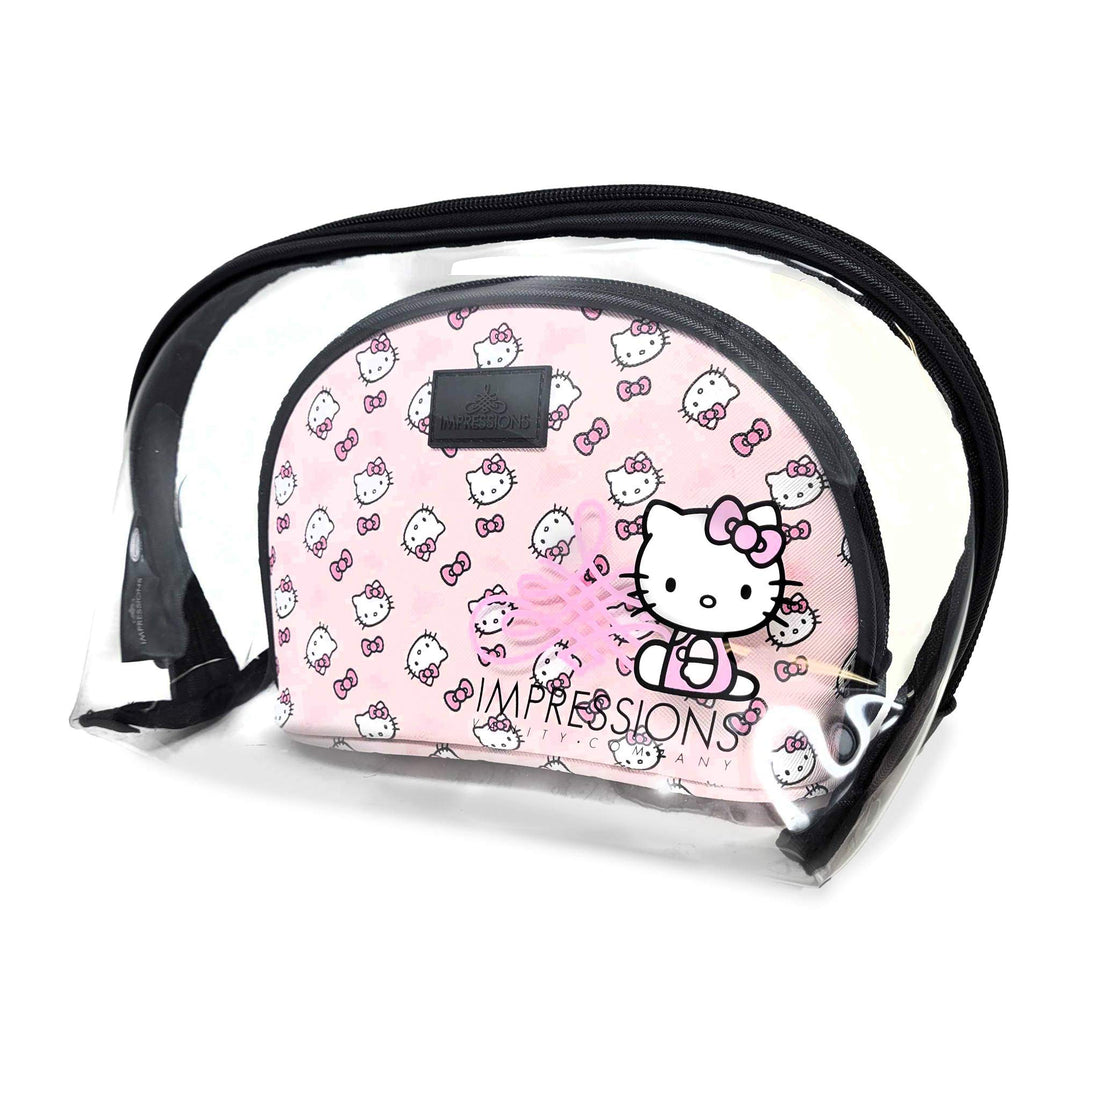 Hello Kitty Cosmetic Purse | Hello Kitty Plush